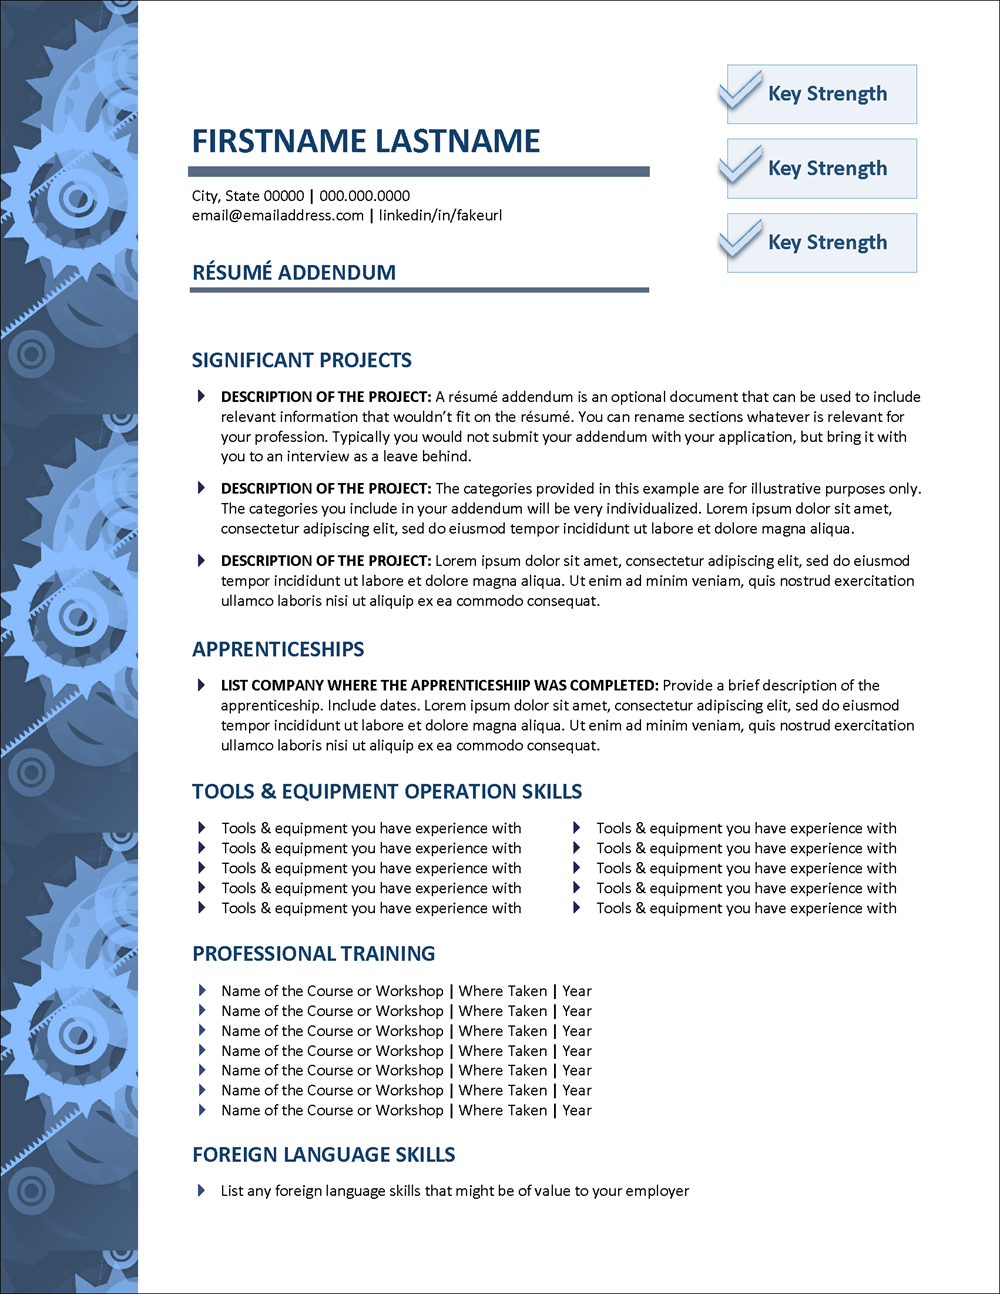 Resume Addendum Template for Manufacturing